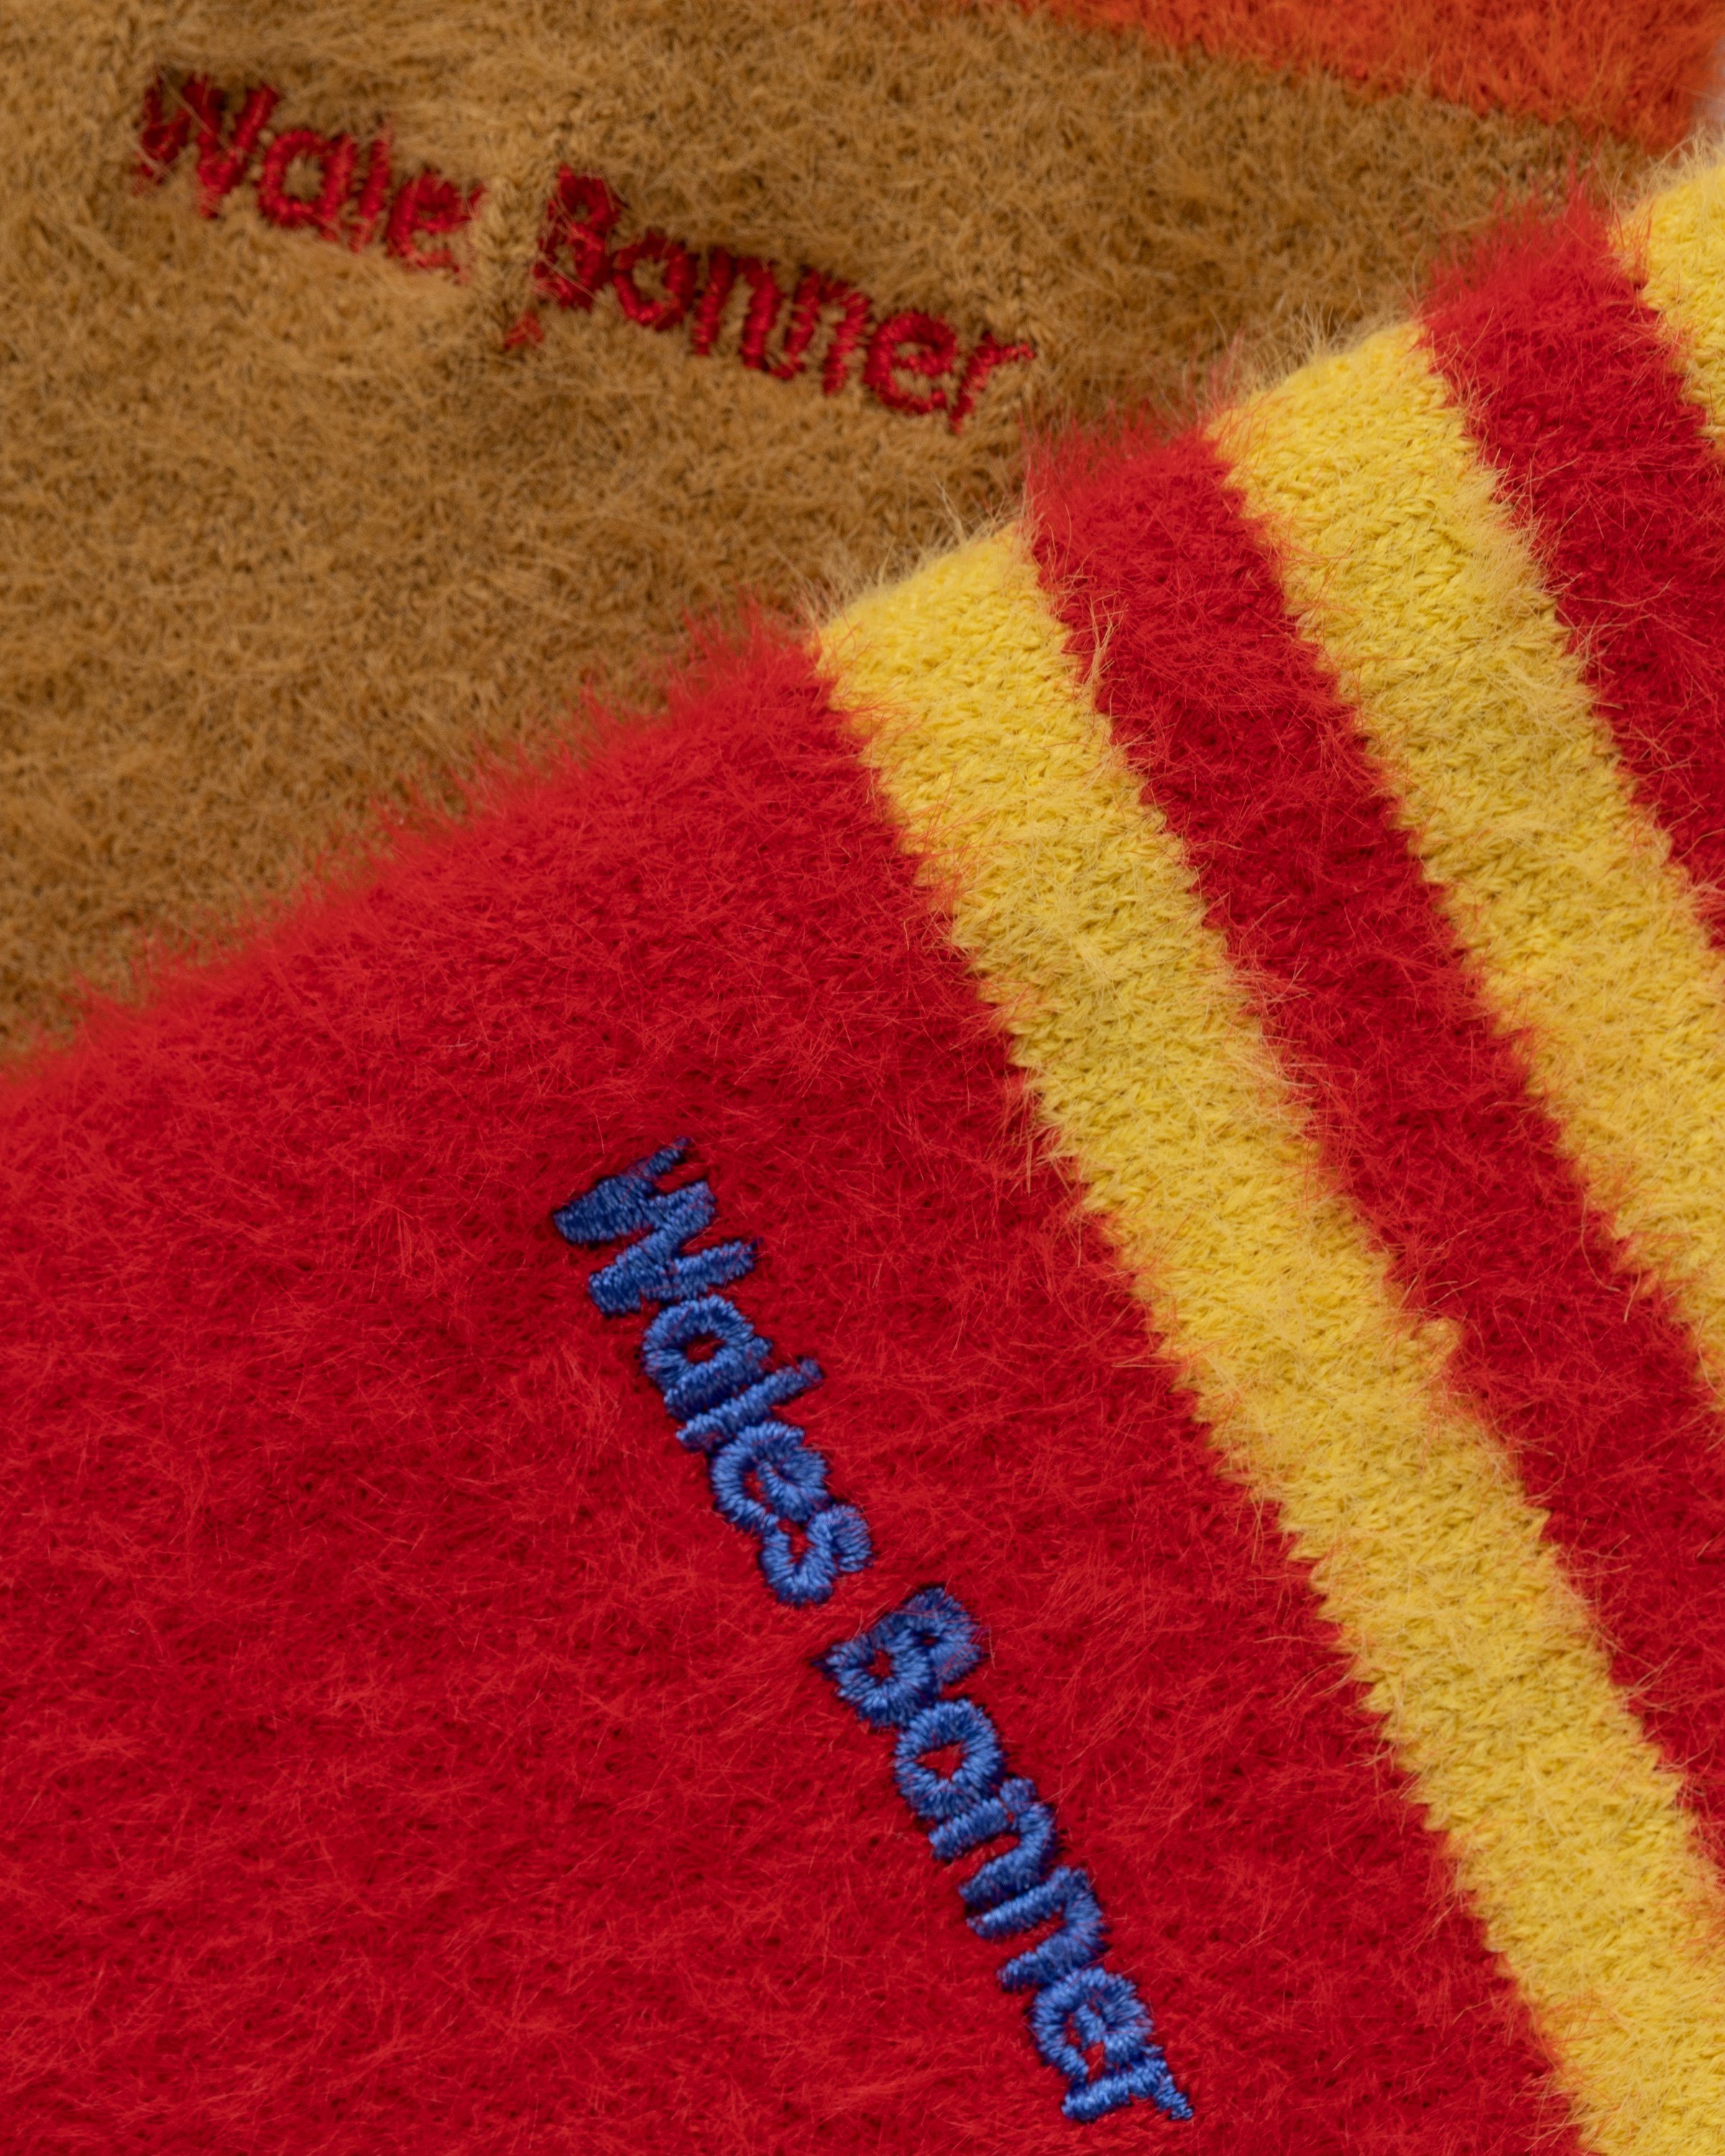 Adidas x Wales Bonner - WB Socks Scarlet/Mesa - Accessories - Yellow - Image 3